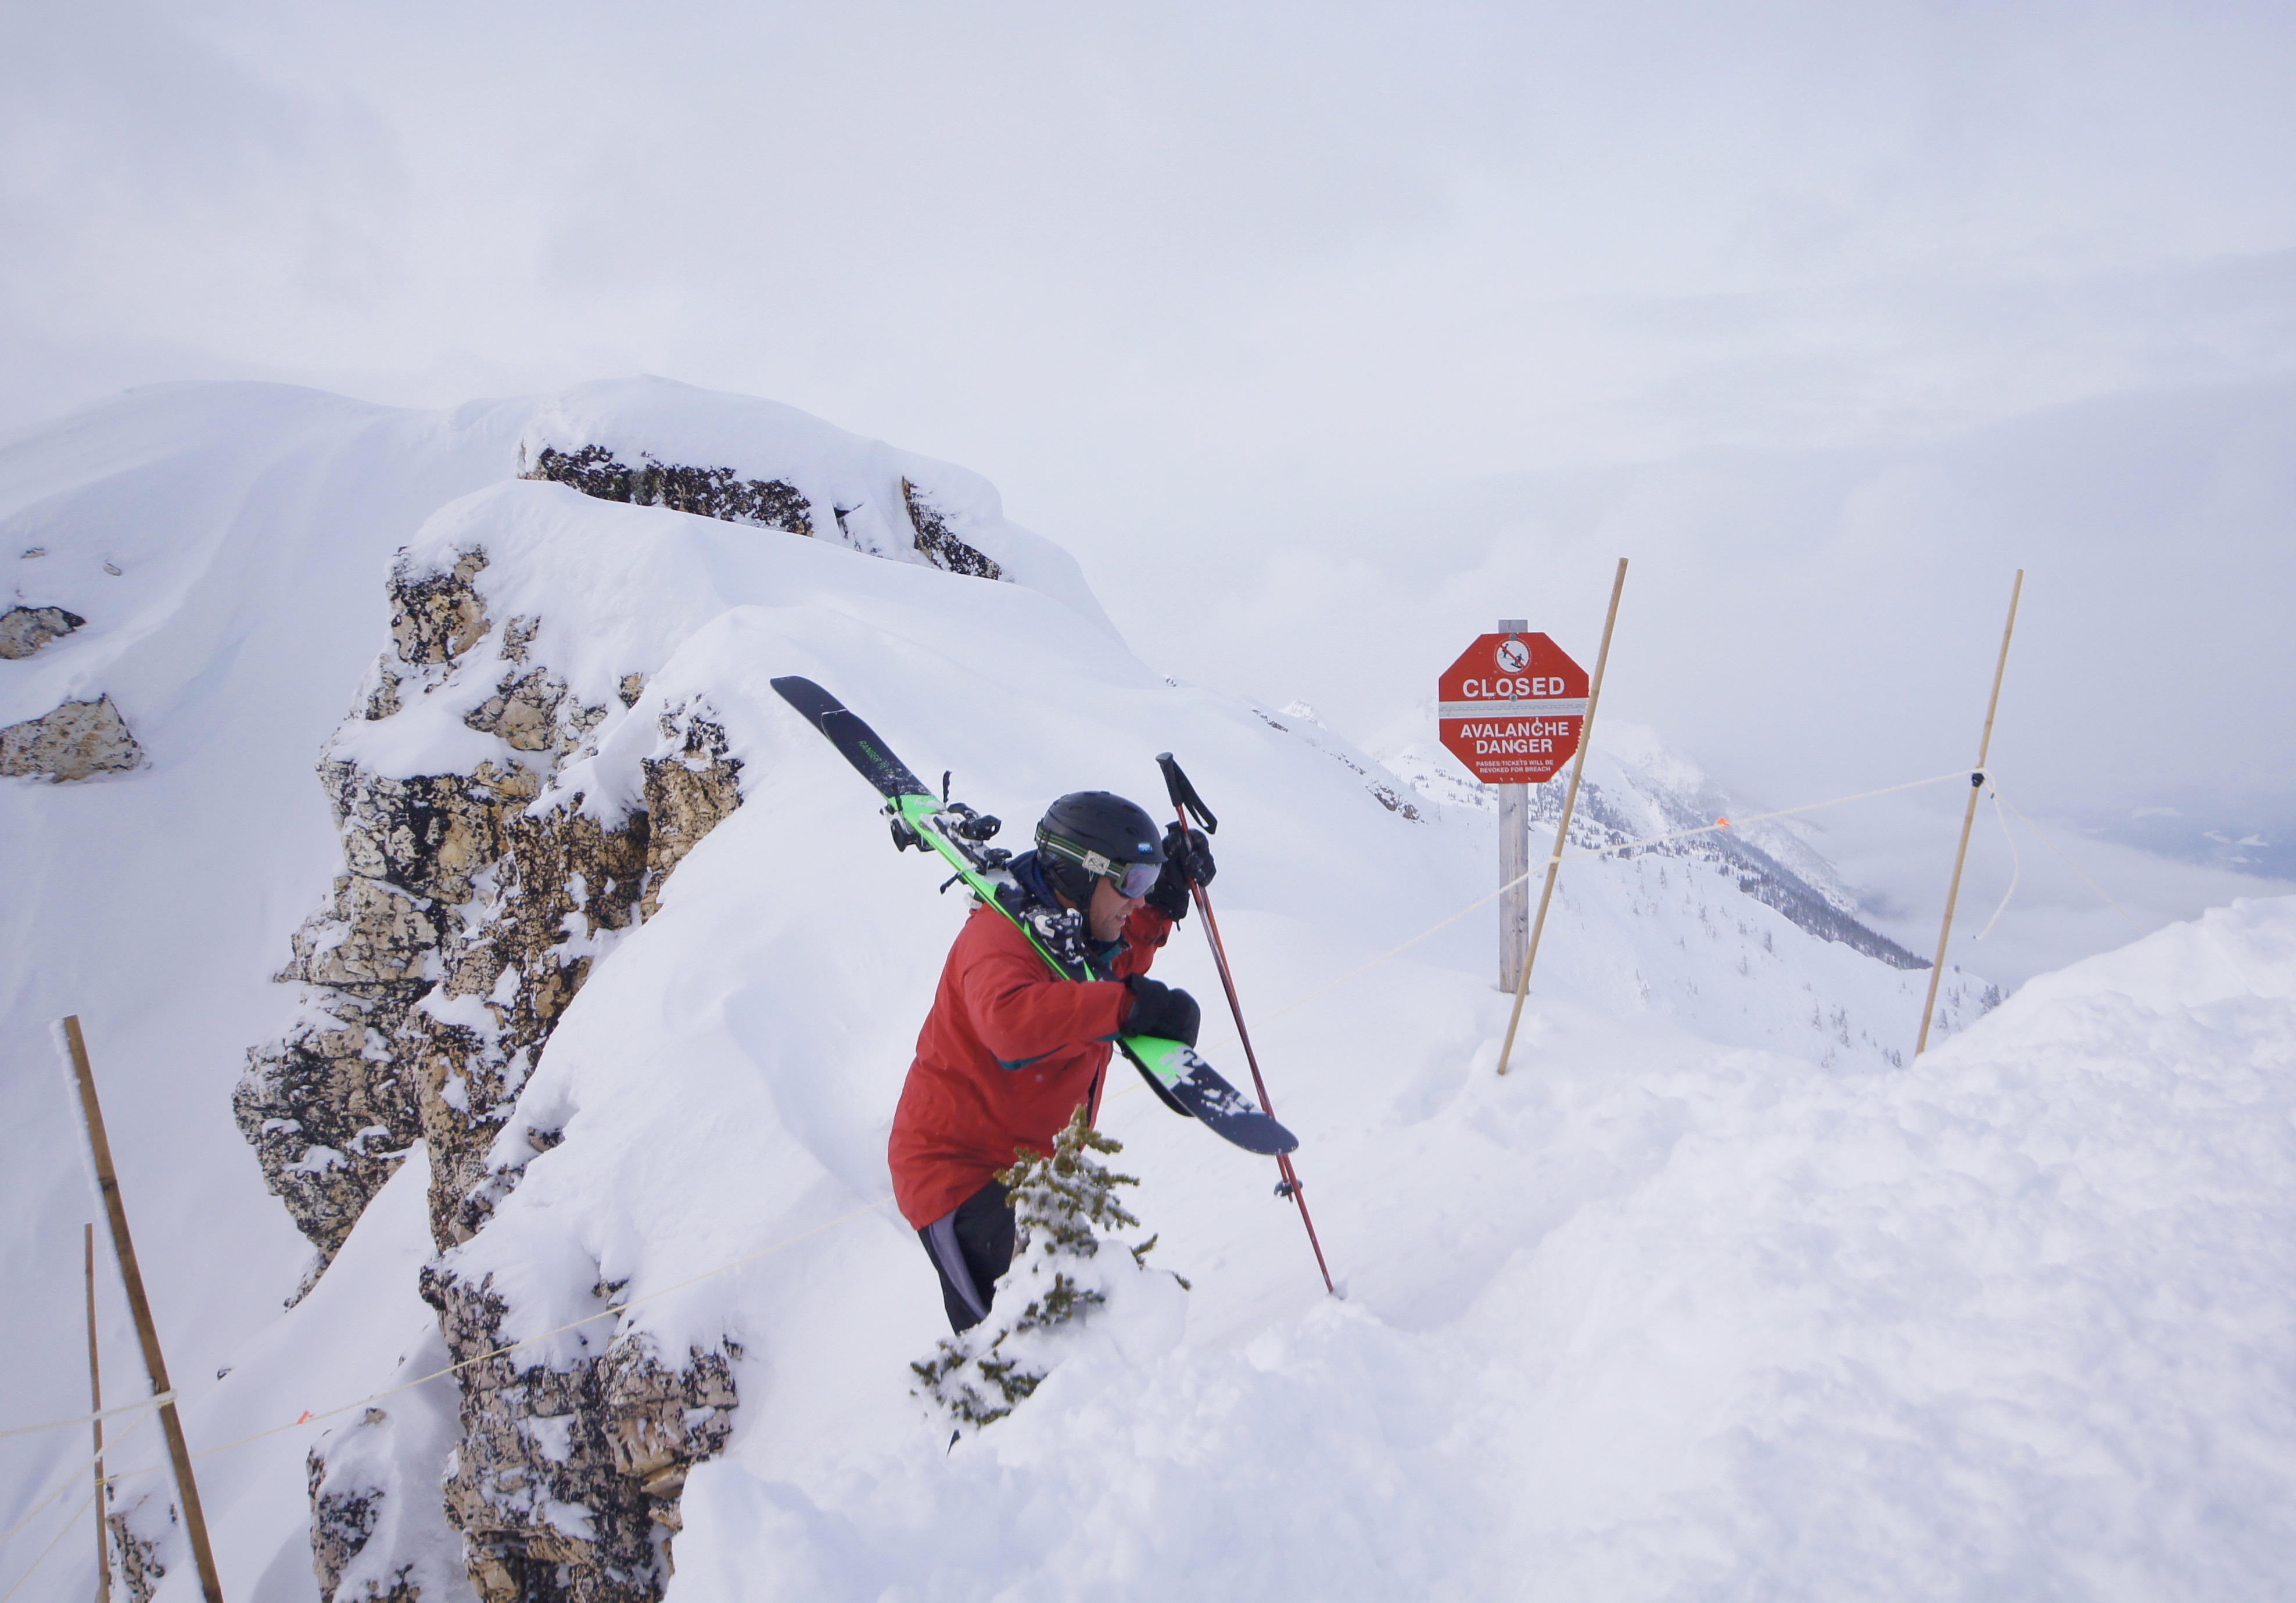 A skier trudges through feet of snow on a mountain.